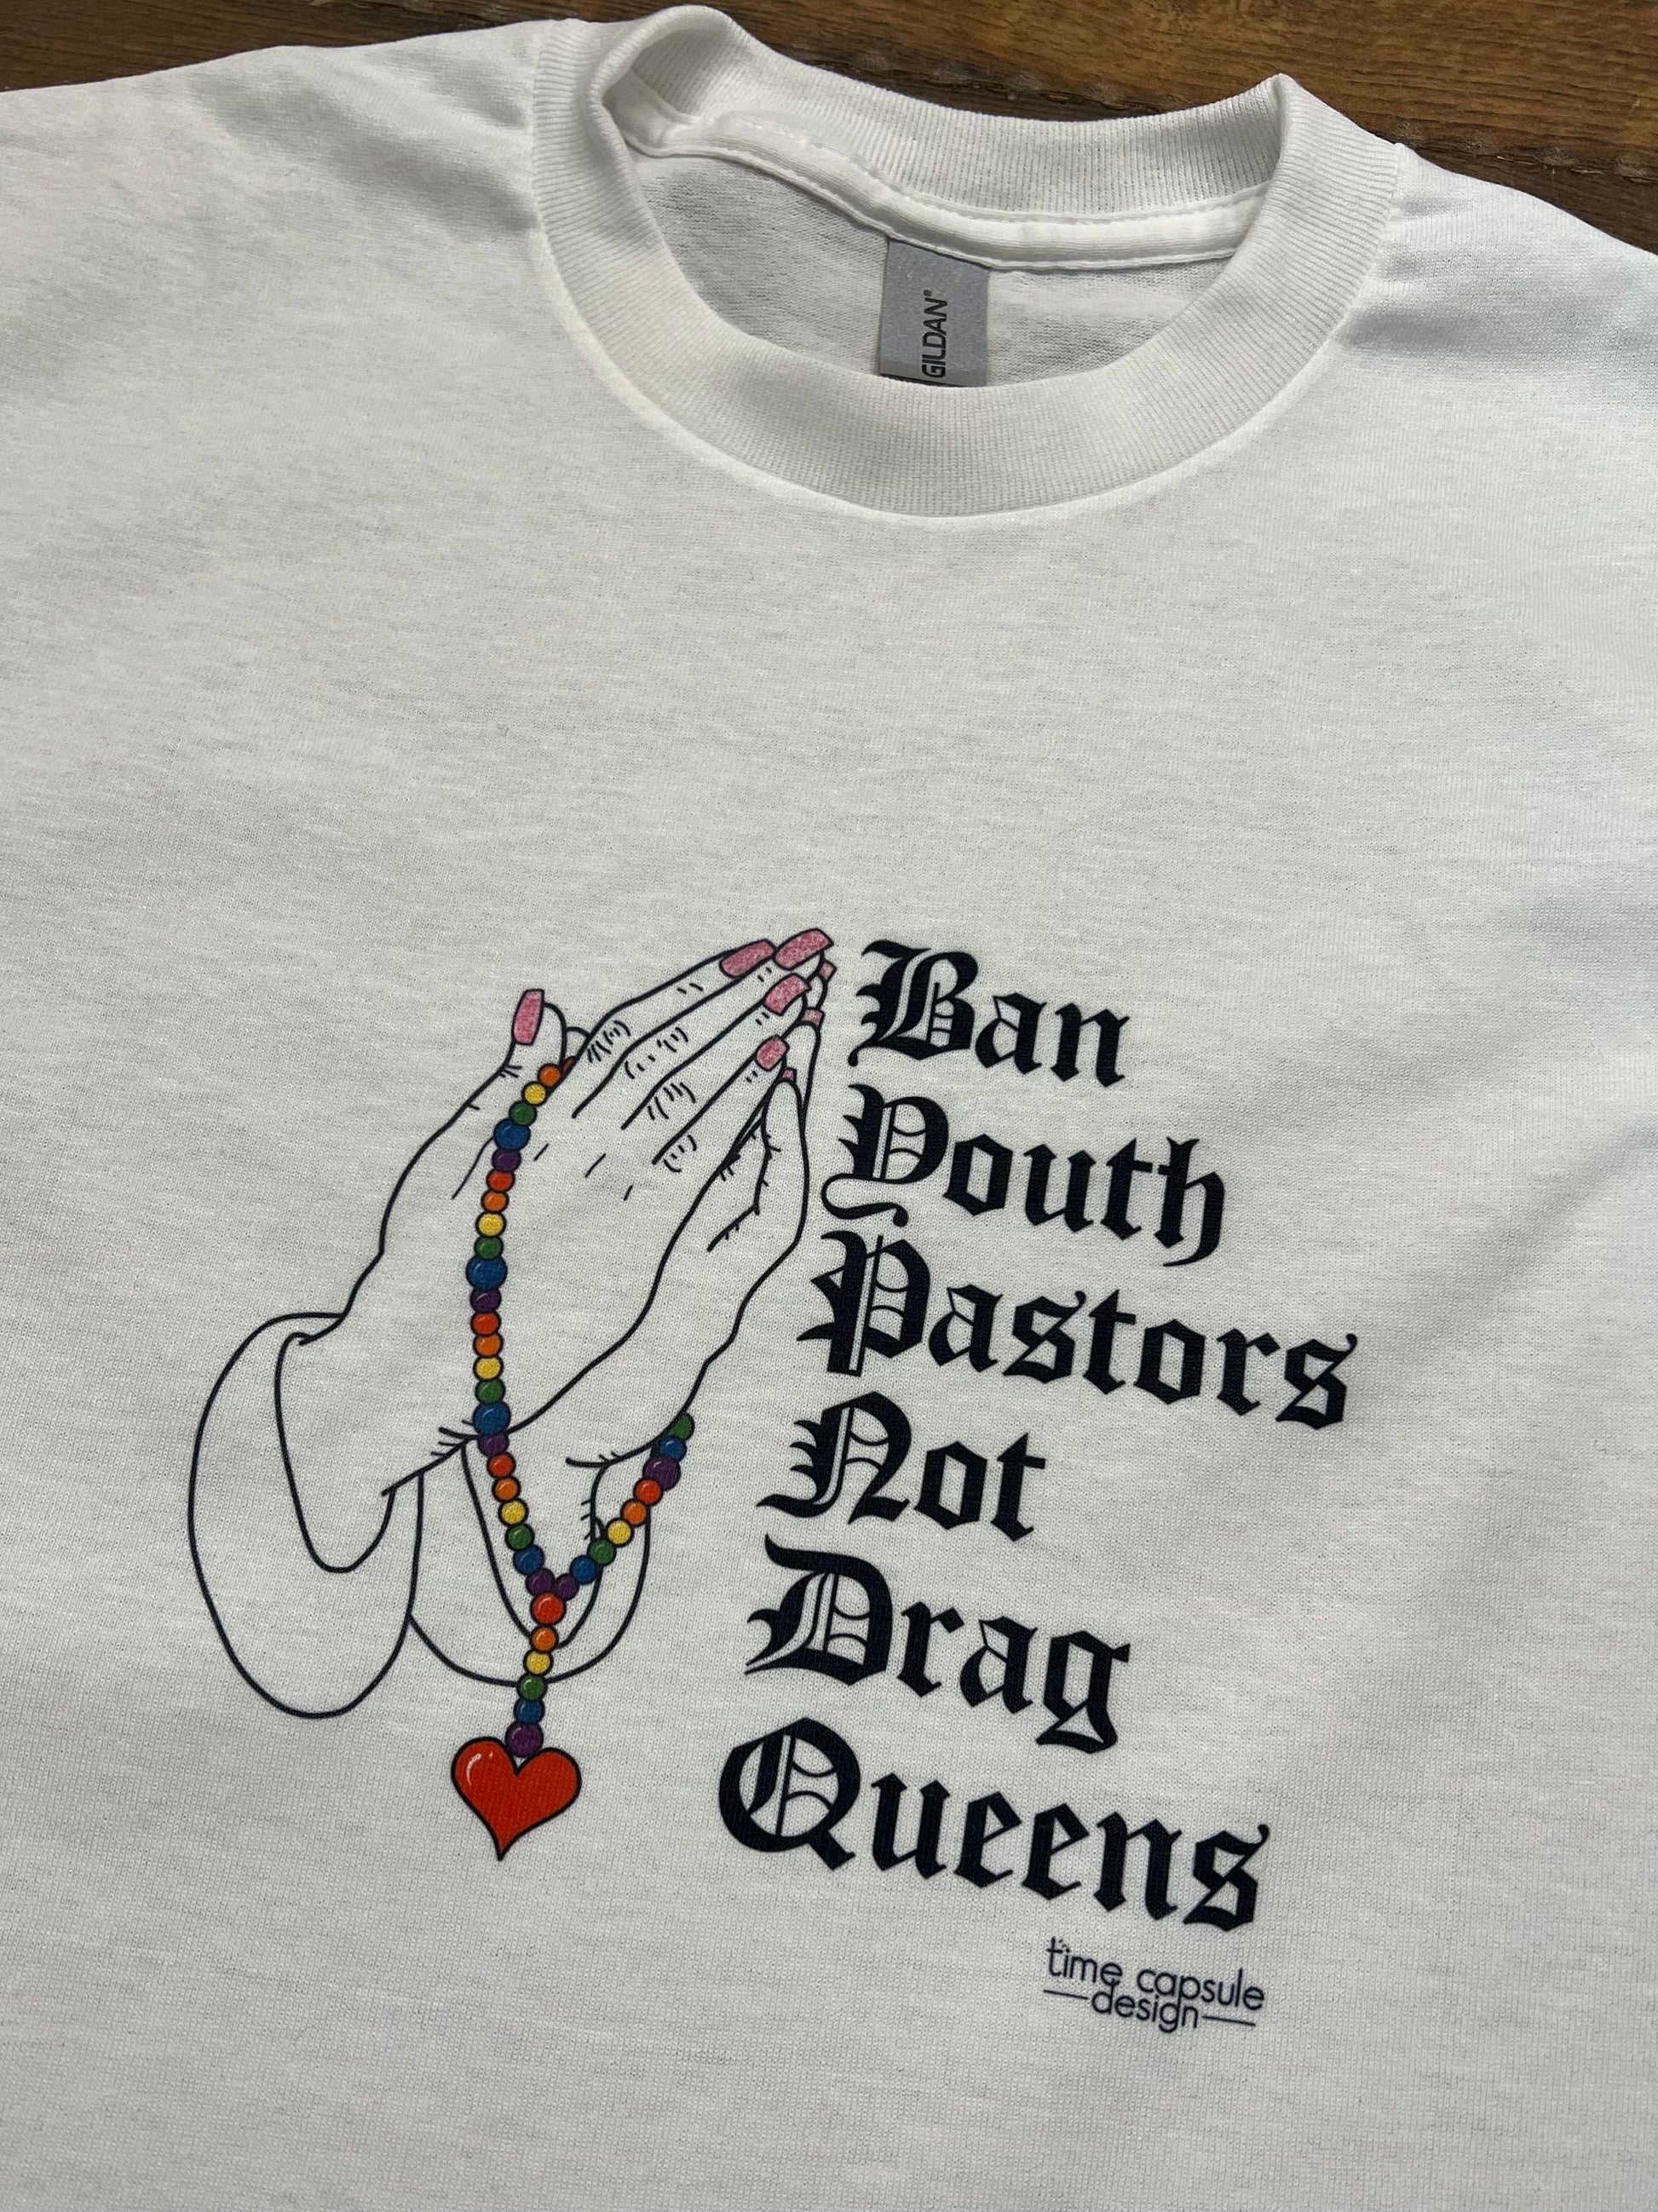 Ban Youth Pastors Not Drag Queens Shirt